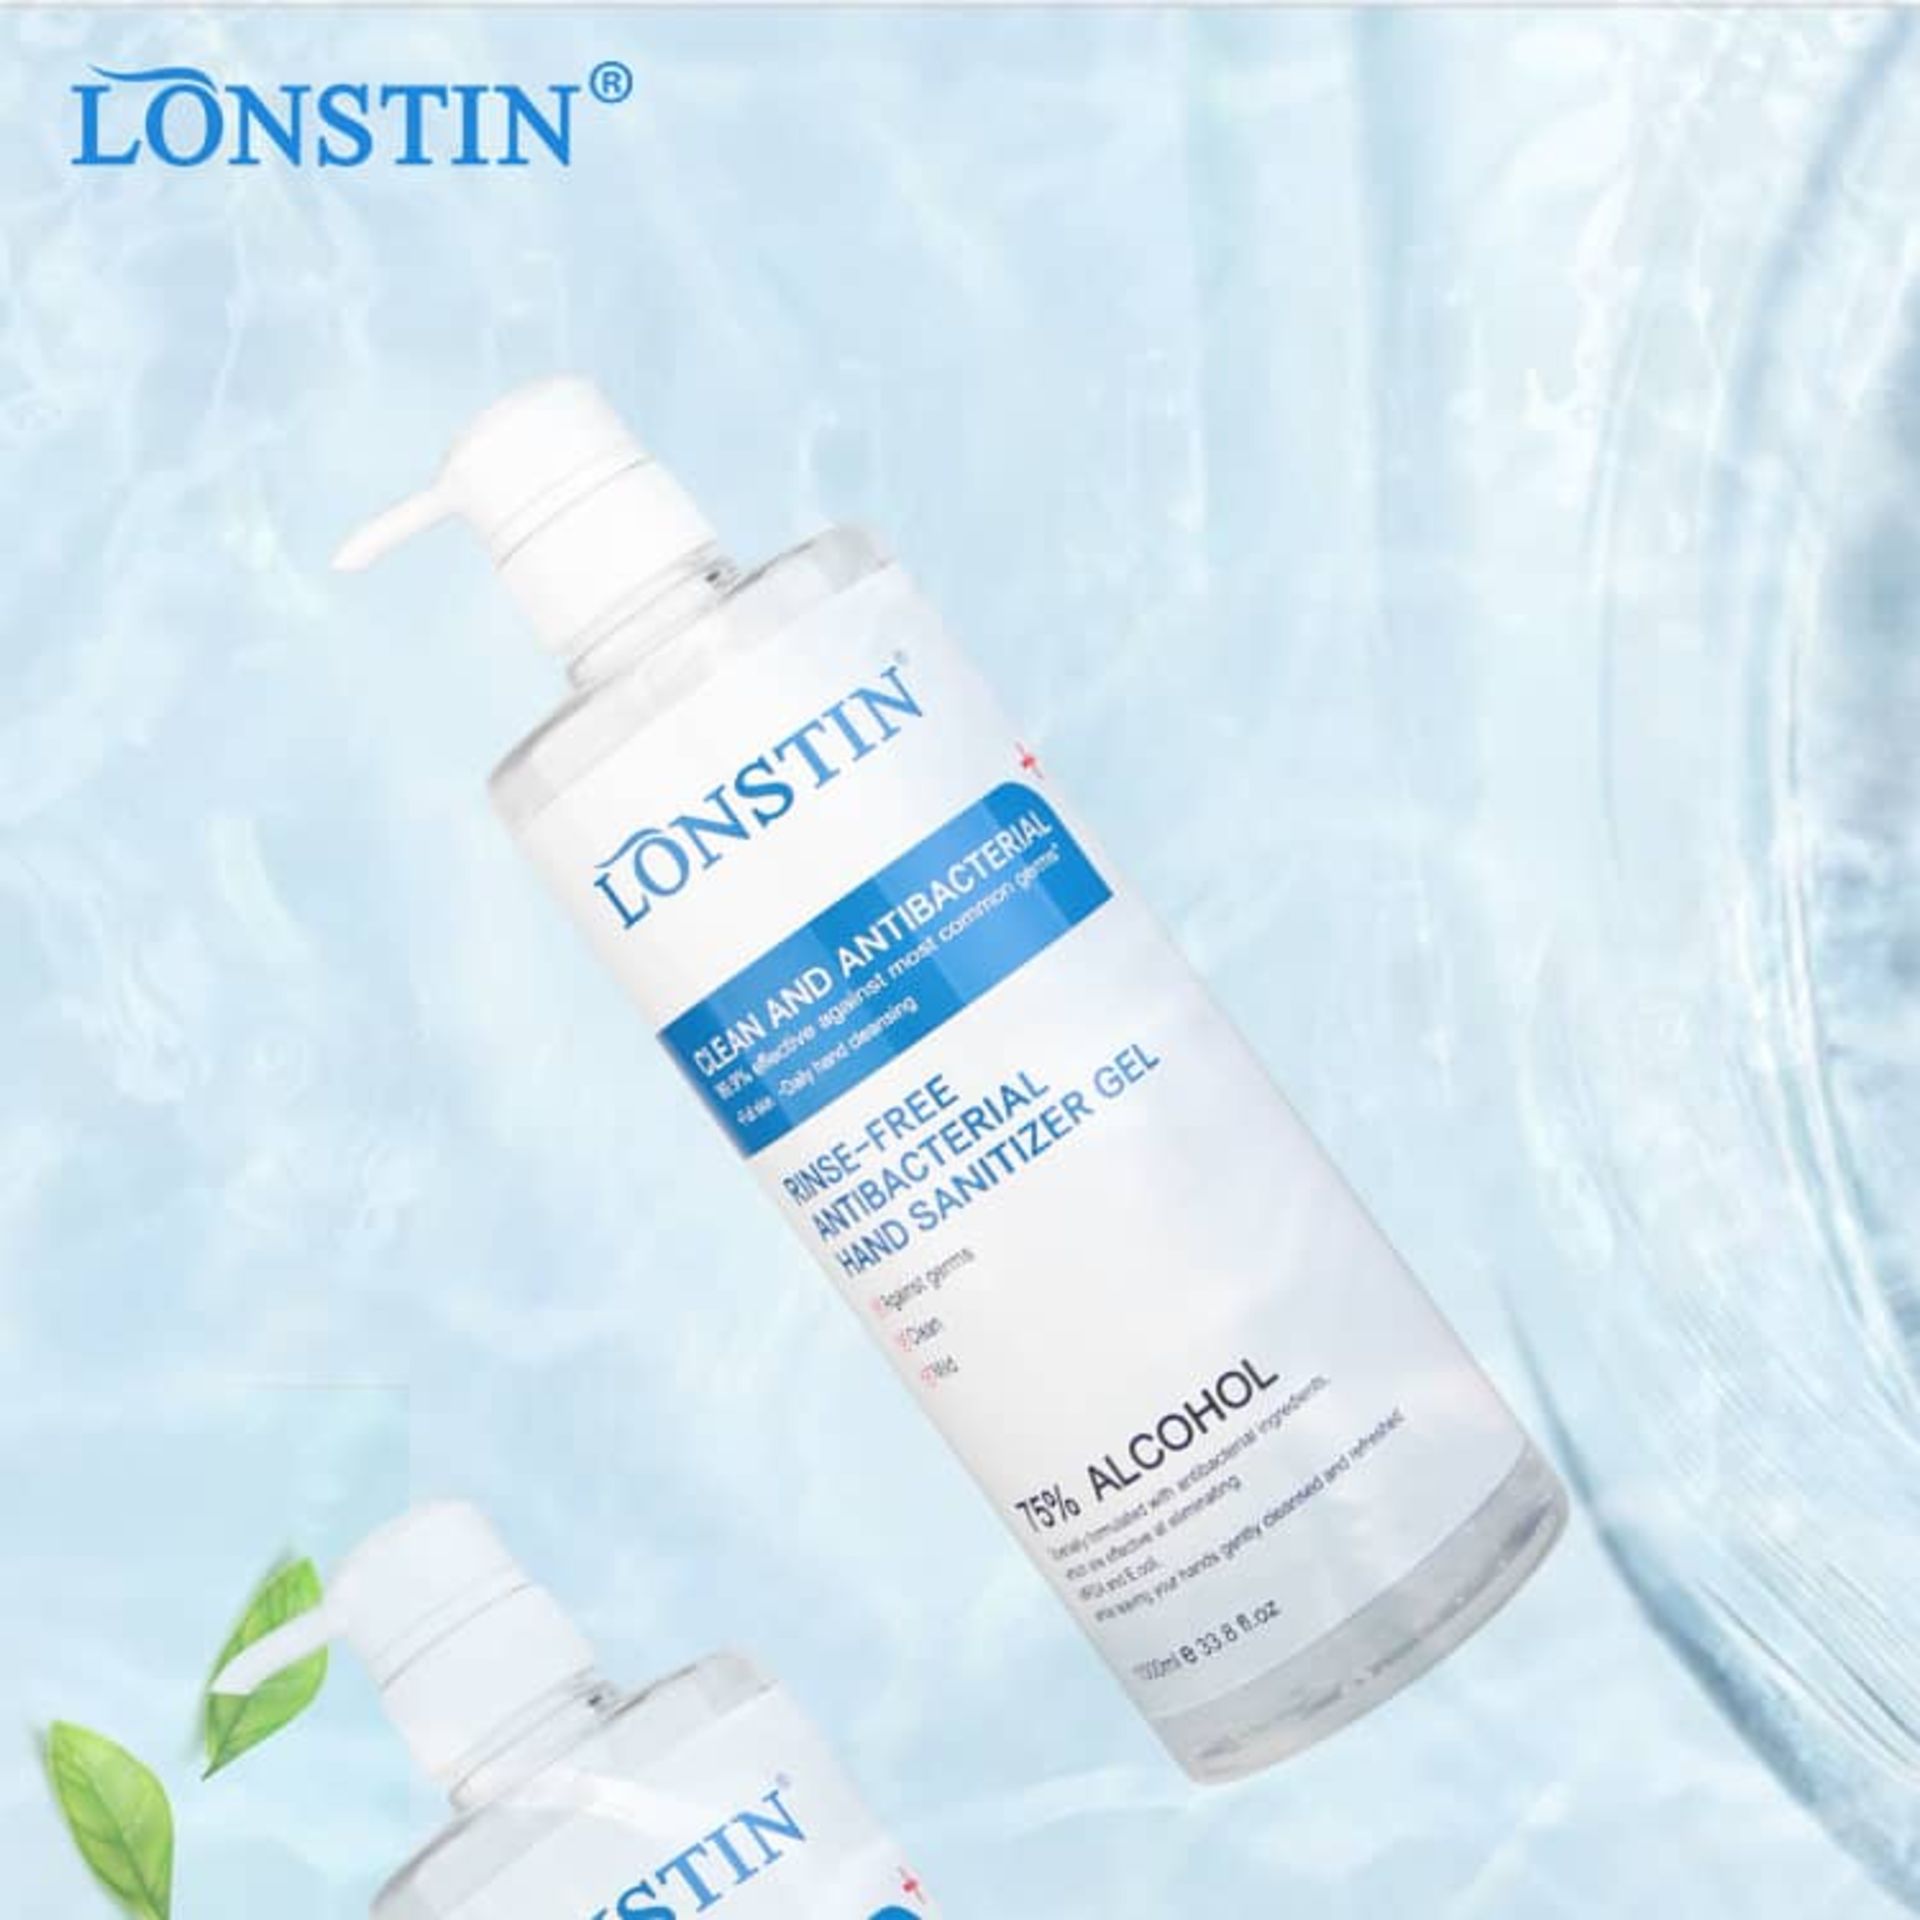 Lonstin Rinse-Free Antibacterial Hand Sanitiser Gel, 75% Alcohol. x1 box containing 120 units per - Image 2 of 2